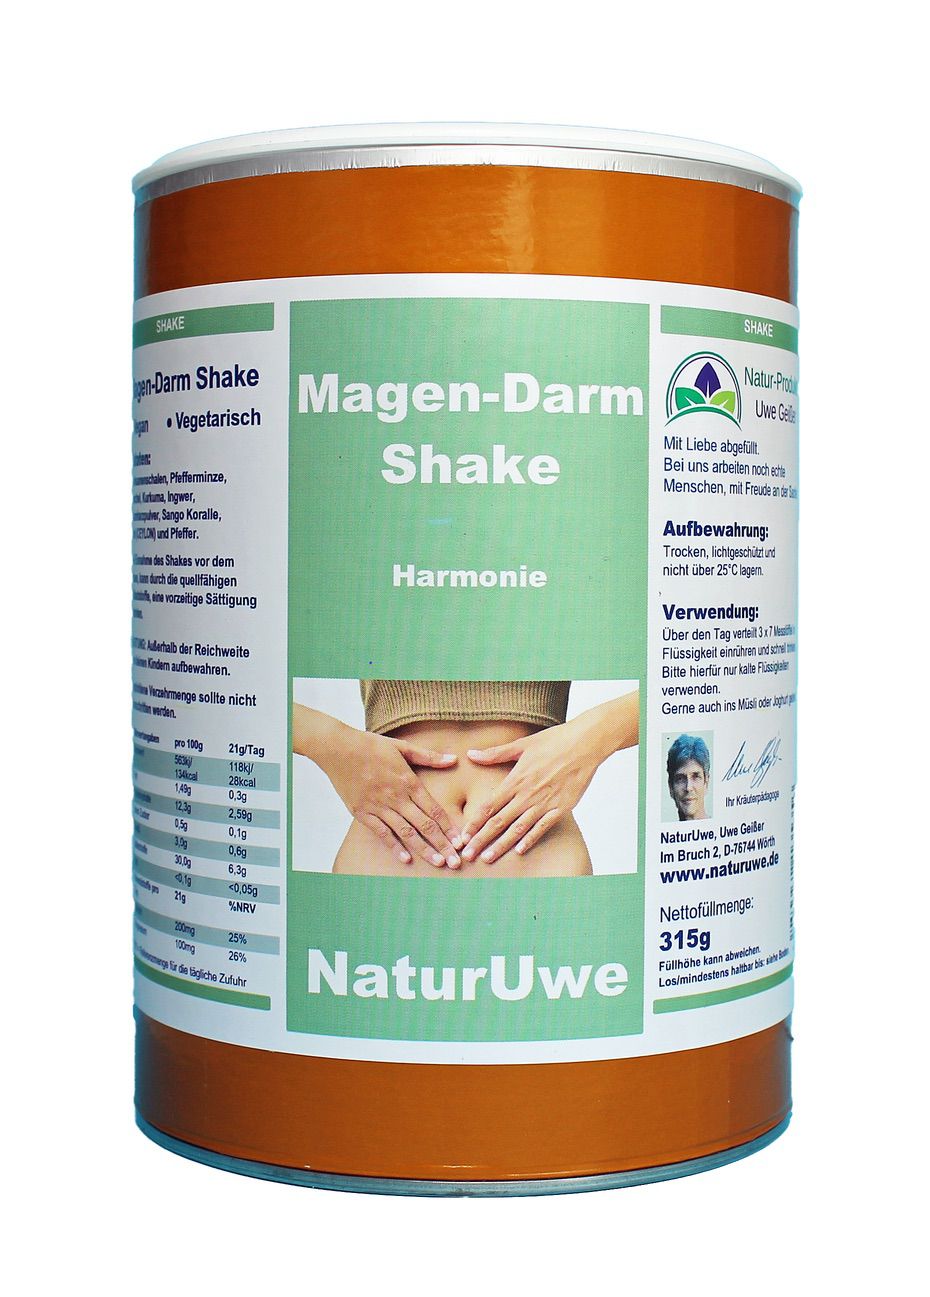 Magen-Darm Shake 315g Dose - NaturUwe